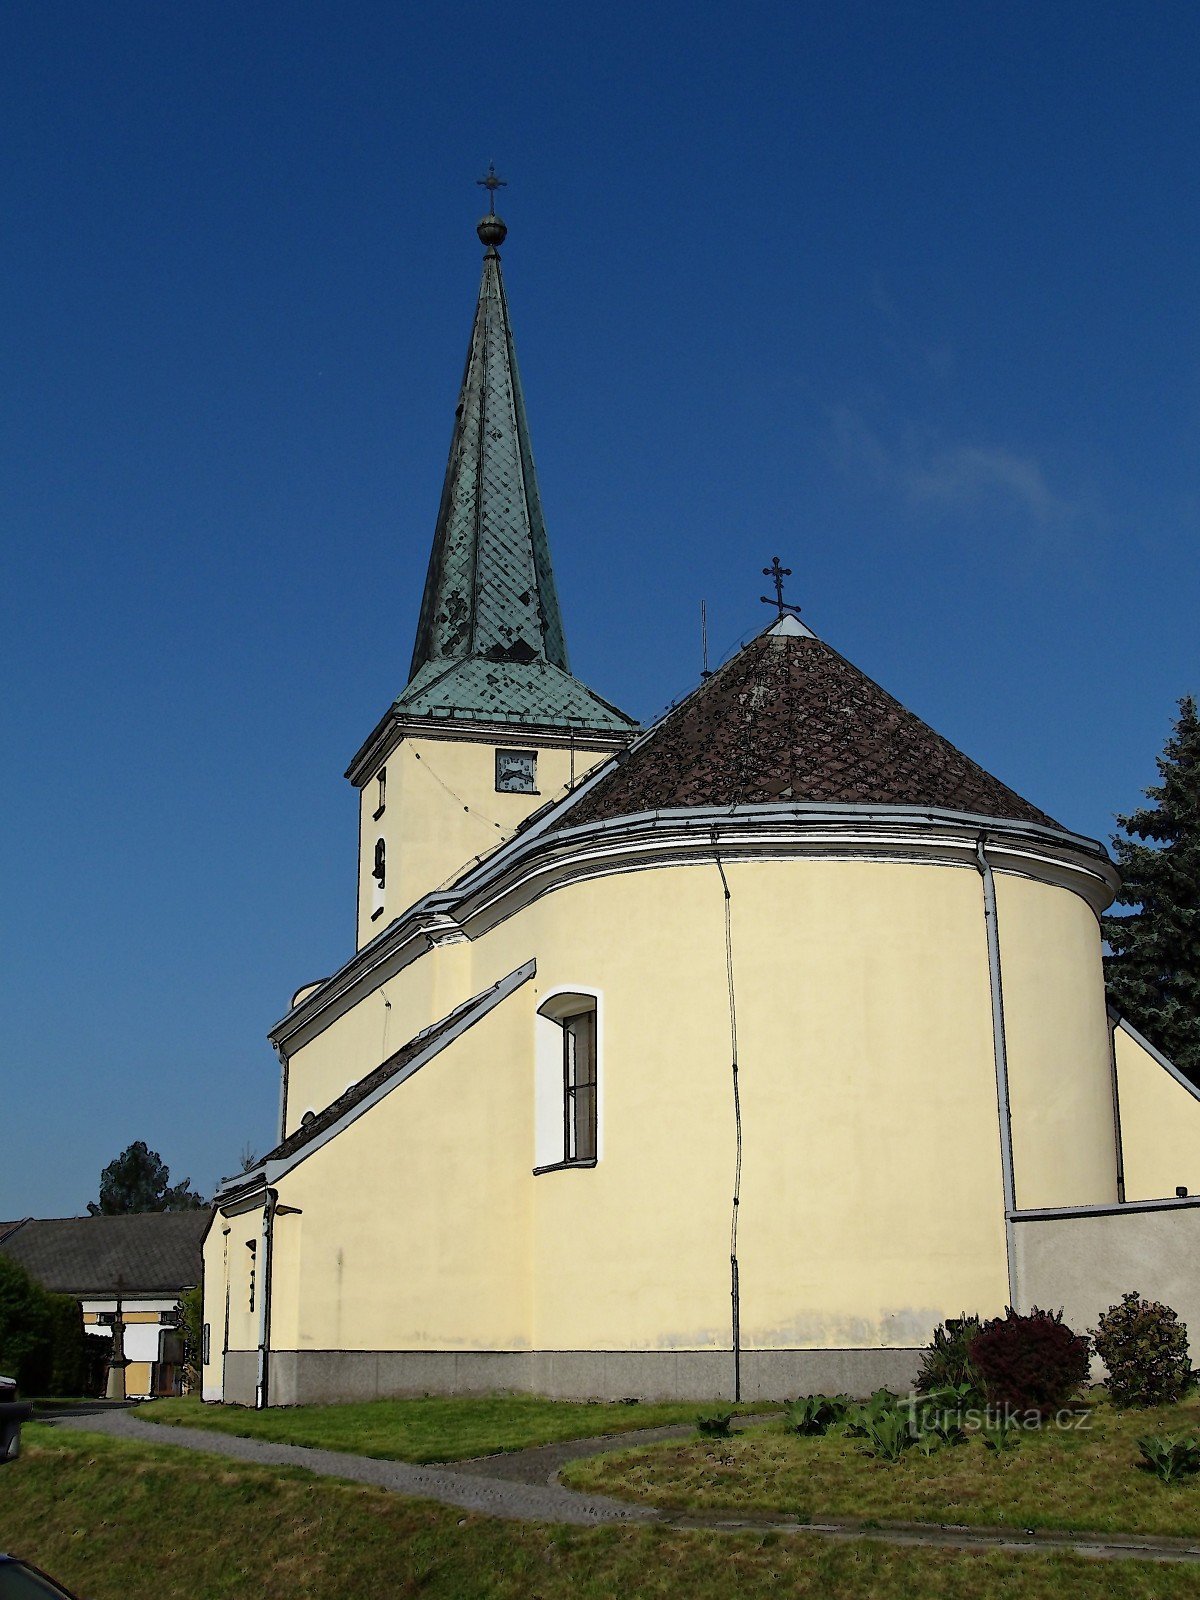 Rymice - kirken St. Bartholomew